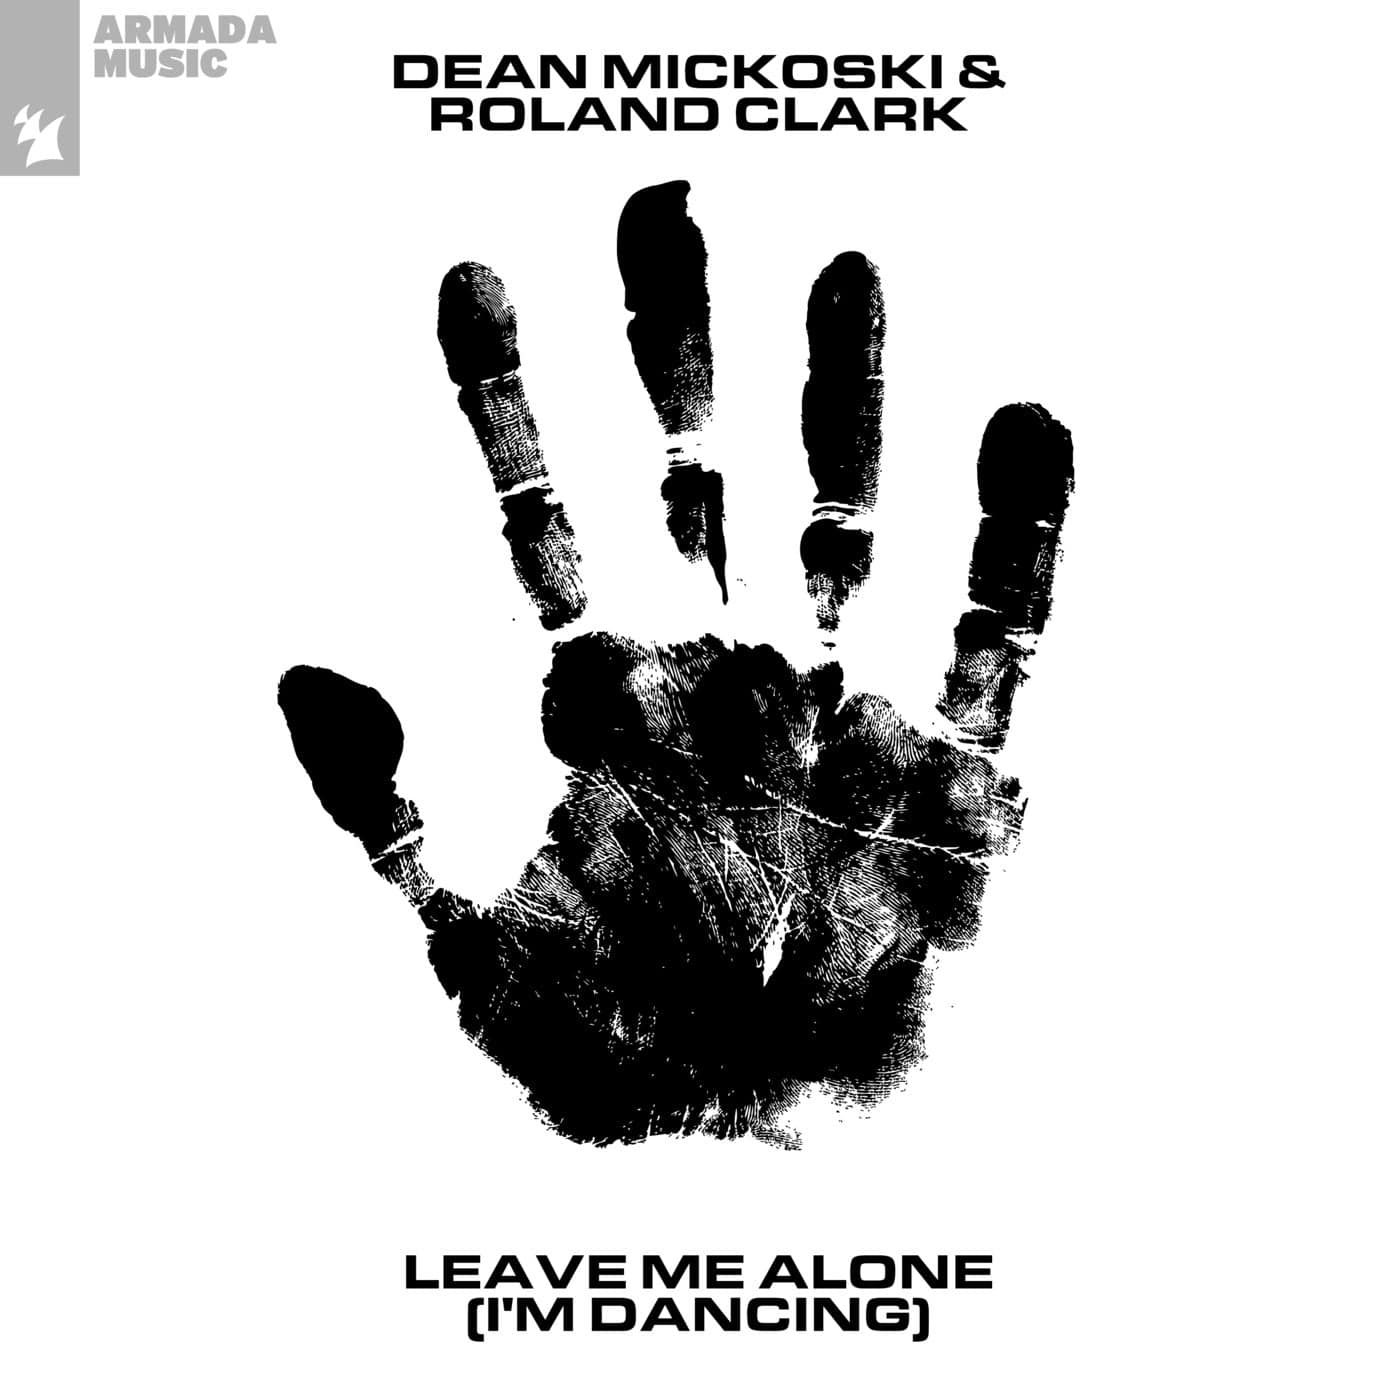 image cover: Roland Clark, Dean Mickoski - Leave Me Alone (I'm Dancing) / ARMAS2177